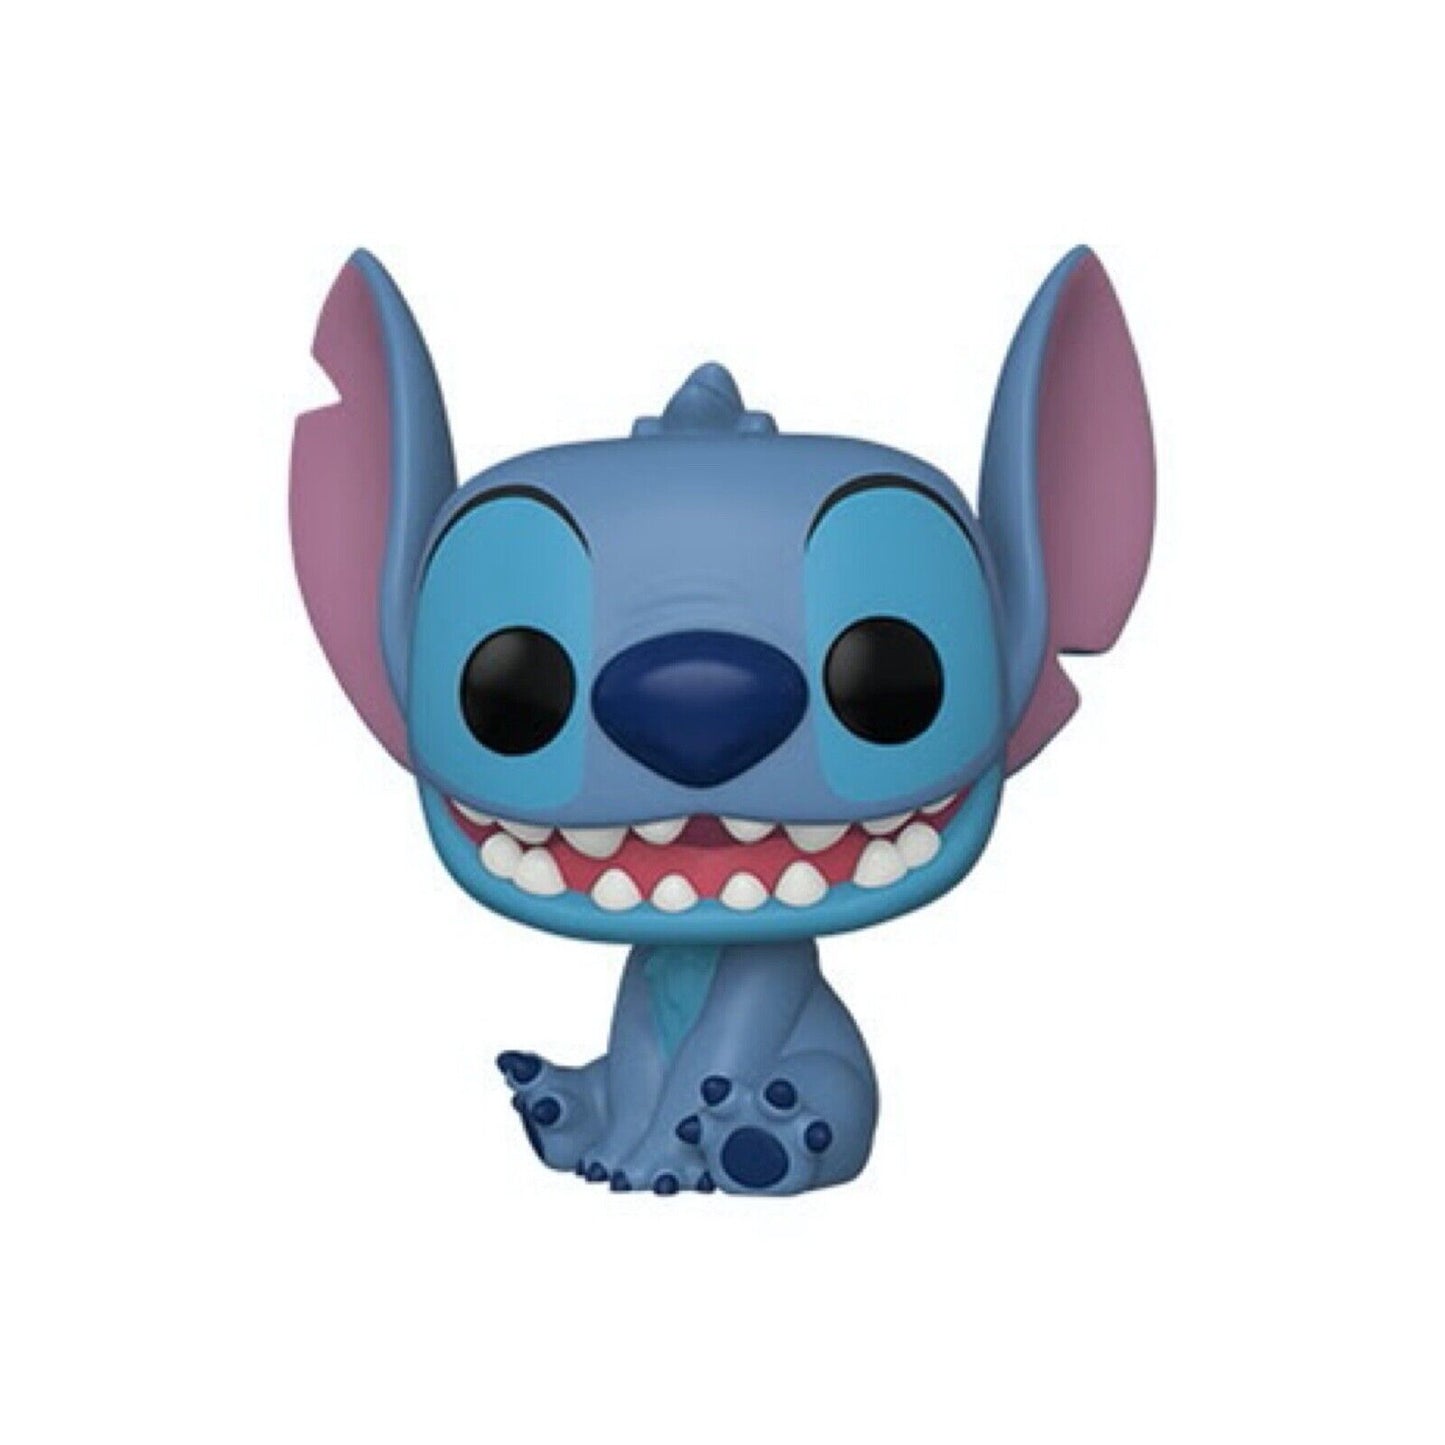 Funko Pop! Jumbo Stitch #1046 Disney